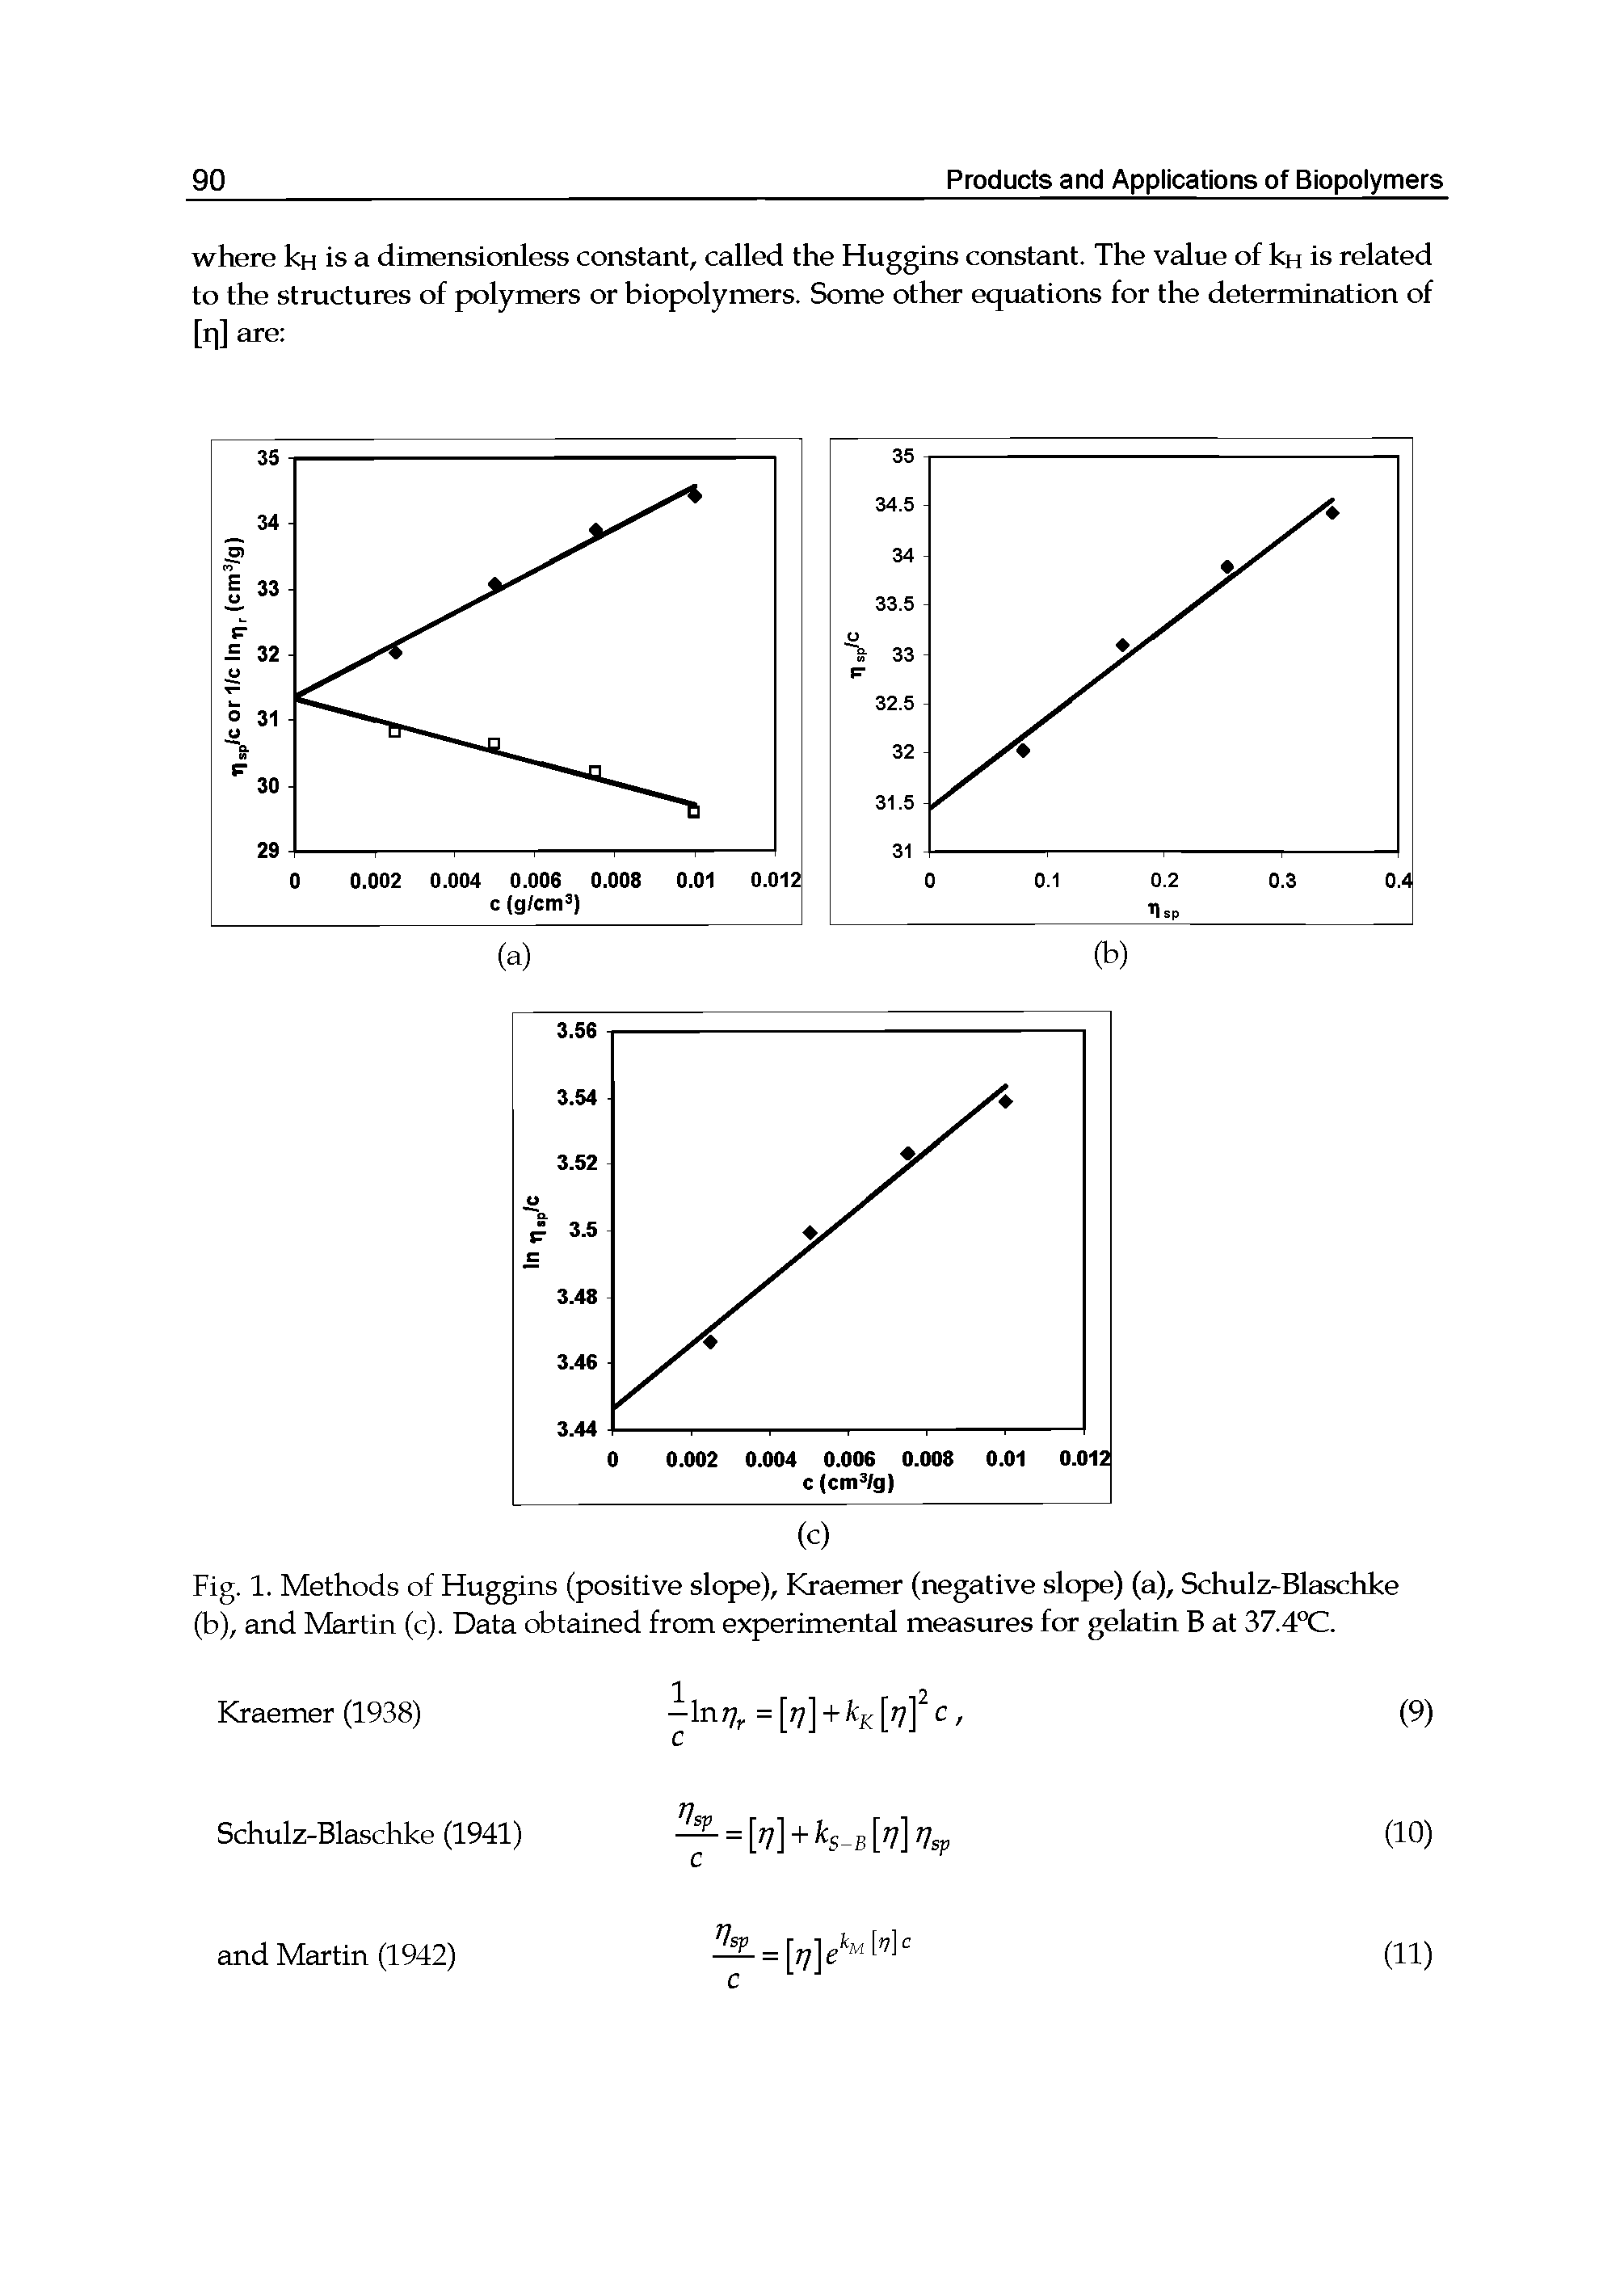 Fig. 1. Methods of Huggins (positive slope), Kraemer (negative slope) (a), Schulz-Blaschke (b), and Martin (c). Data obtained from experimental measures for gelatin B at 37.4°C.